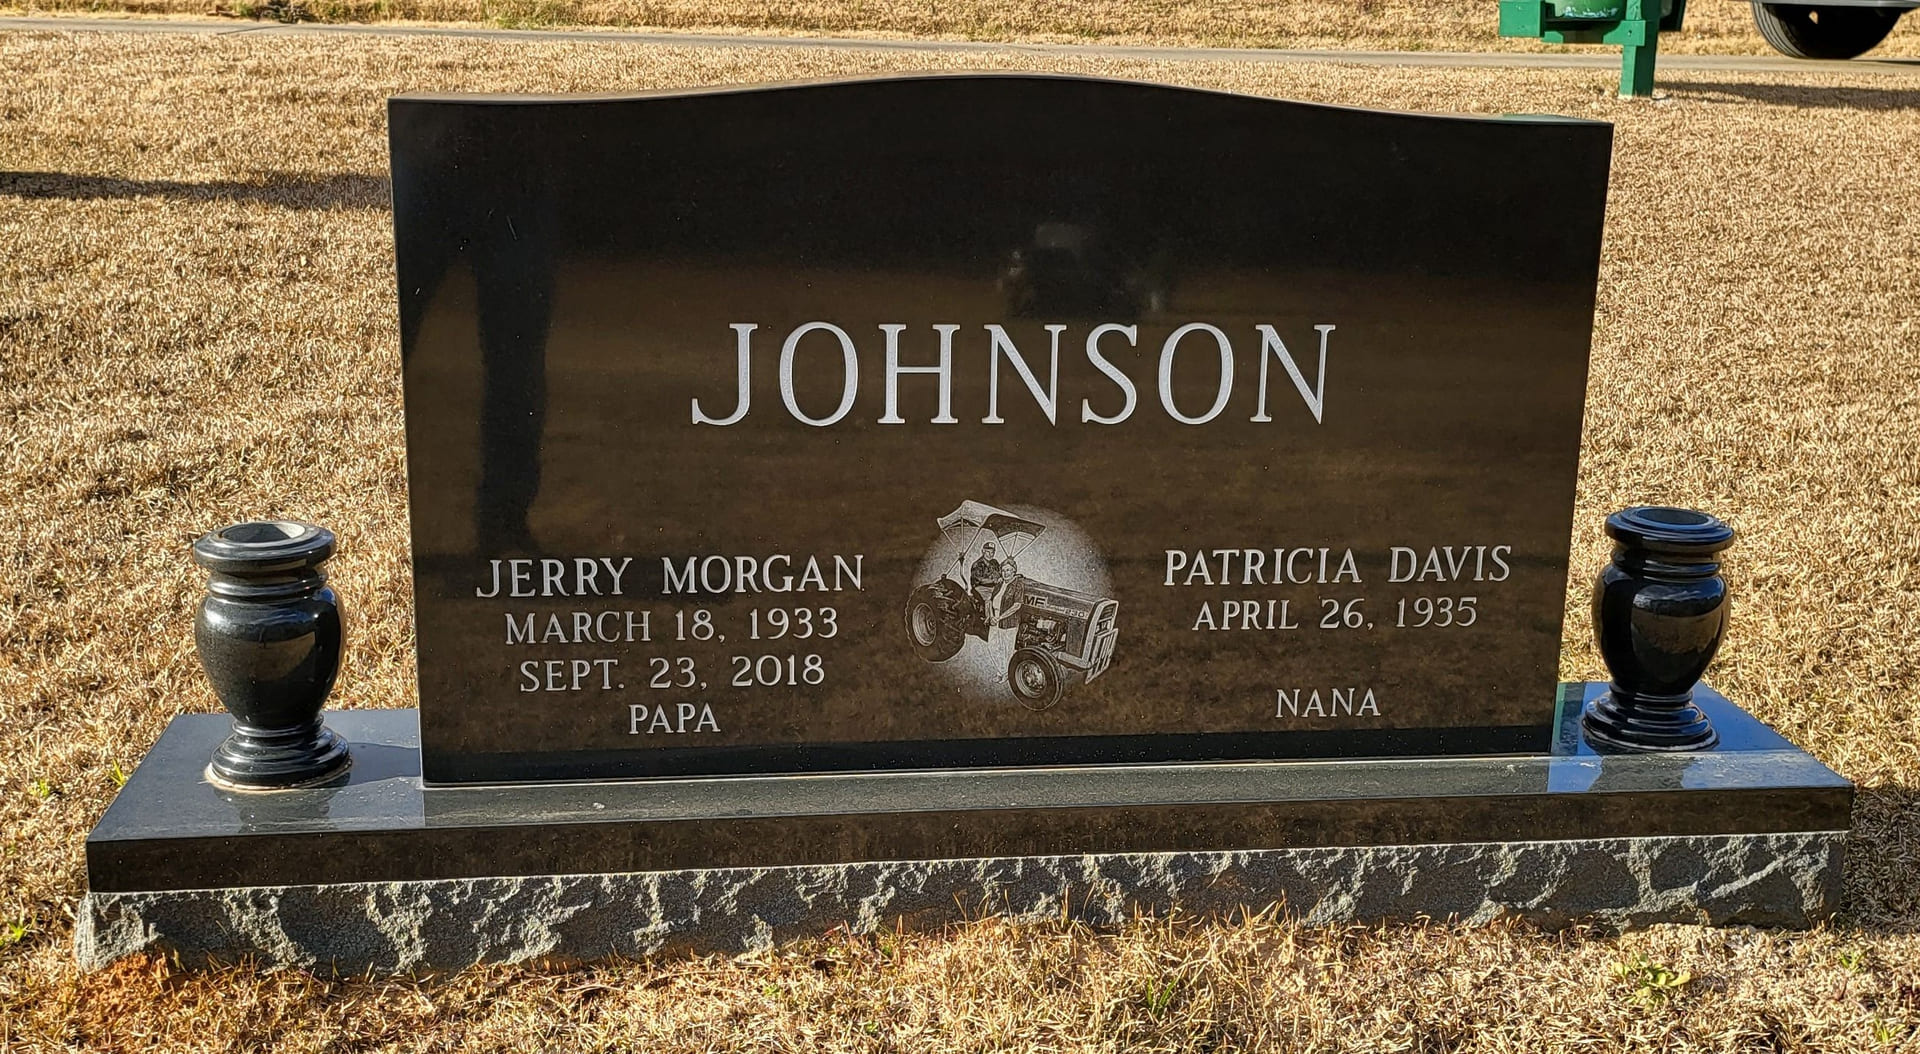 A memorial slab for Jerry Morgan and Patricia Davis